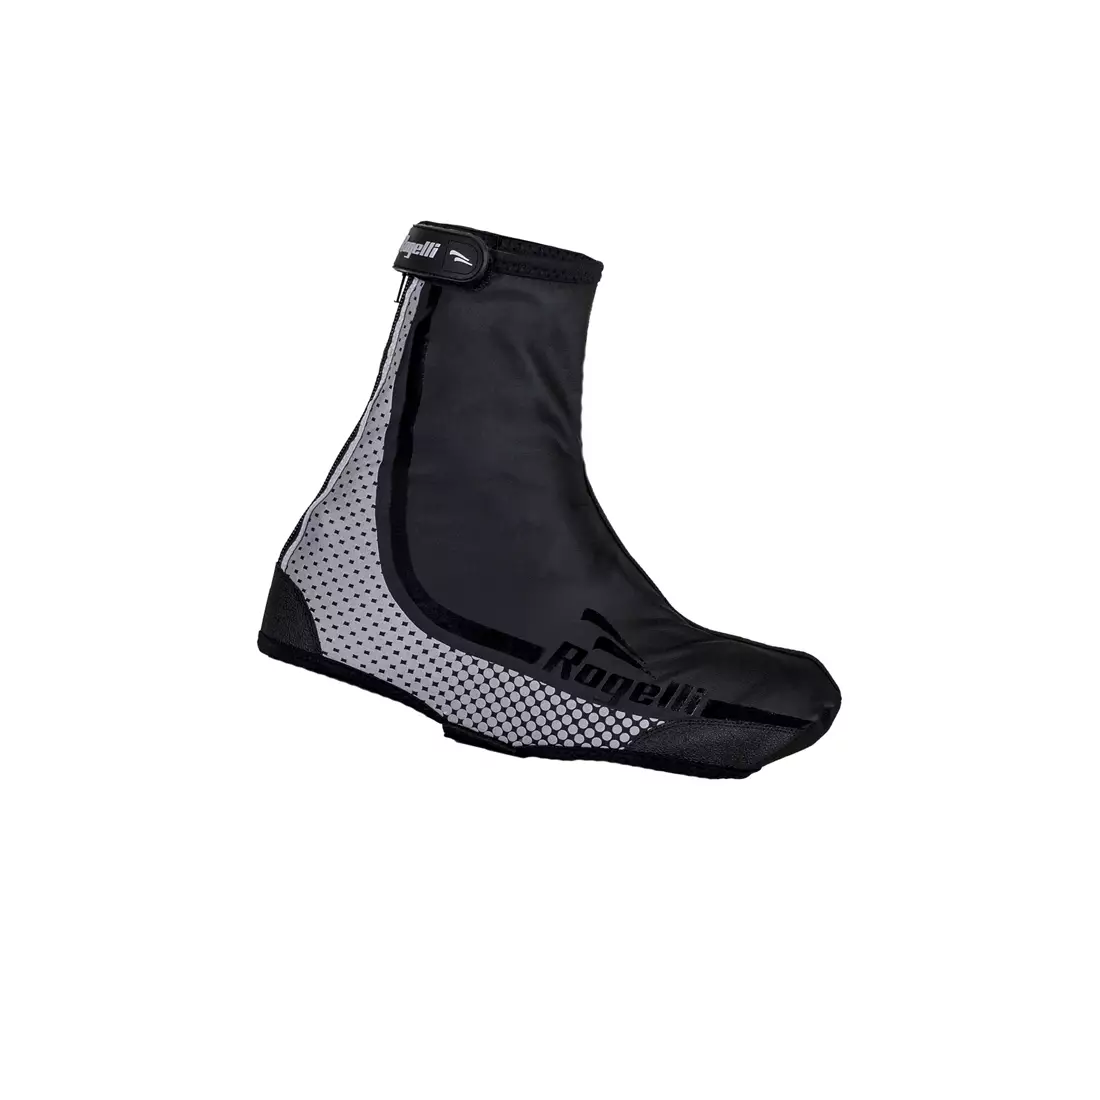 ROGELLI FODERA MTB boot protectors, waterproof, black